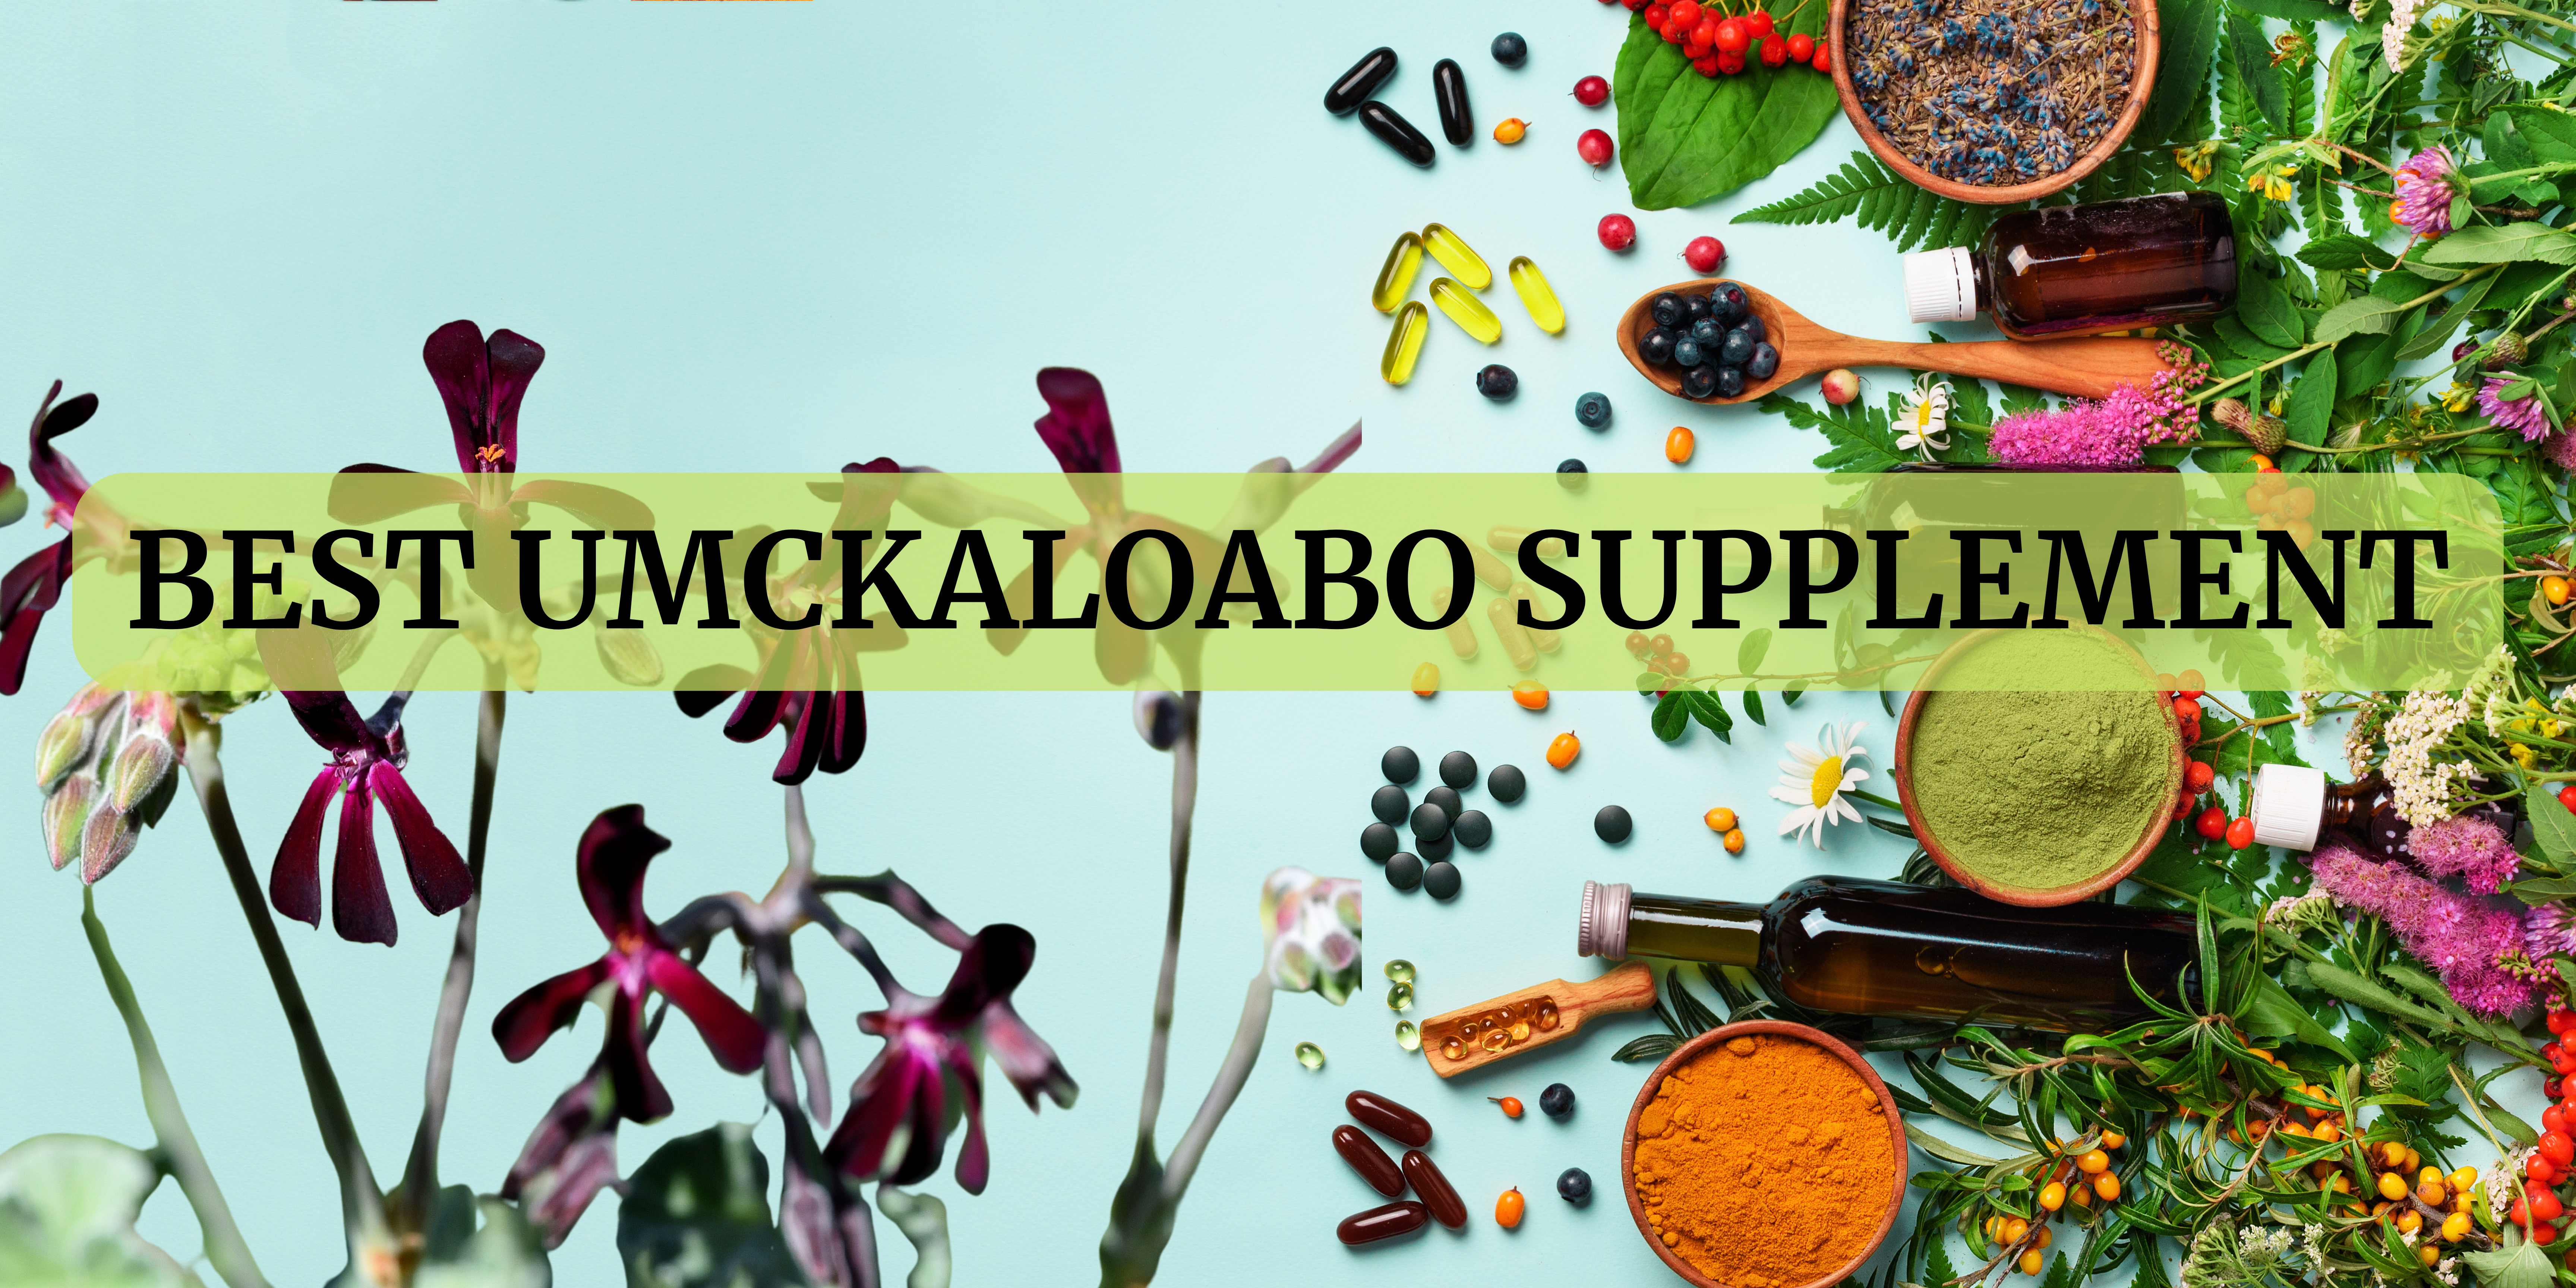 Umckaloabo Supplements in India